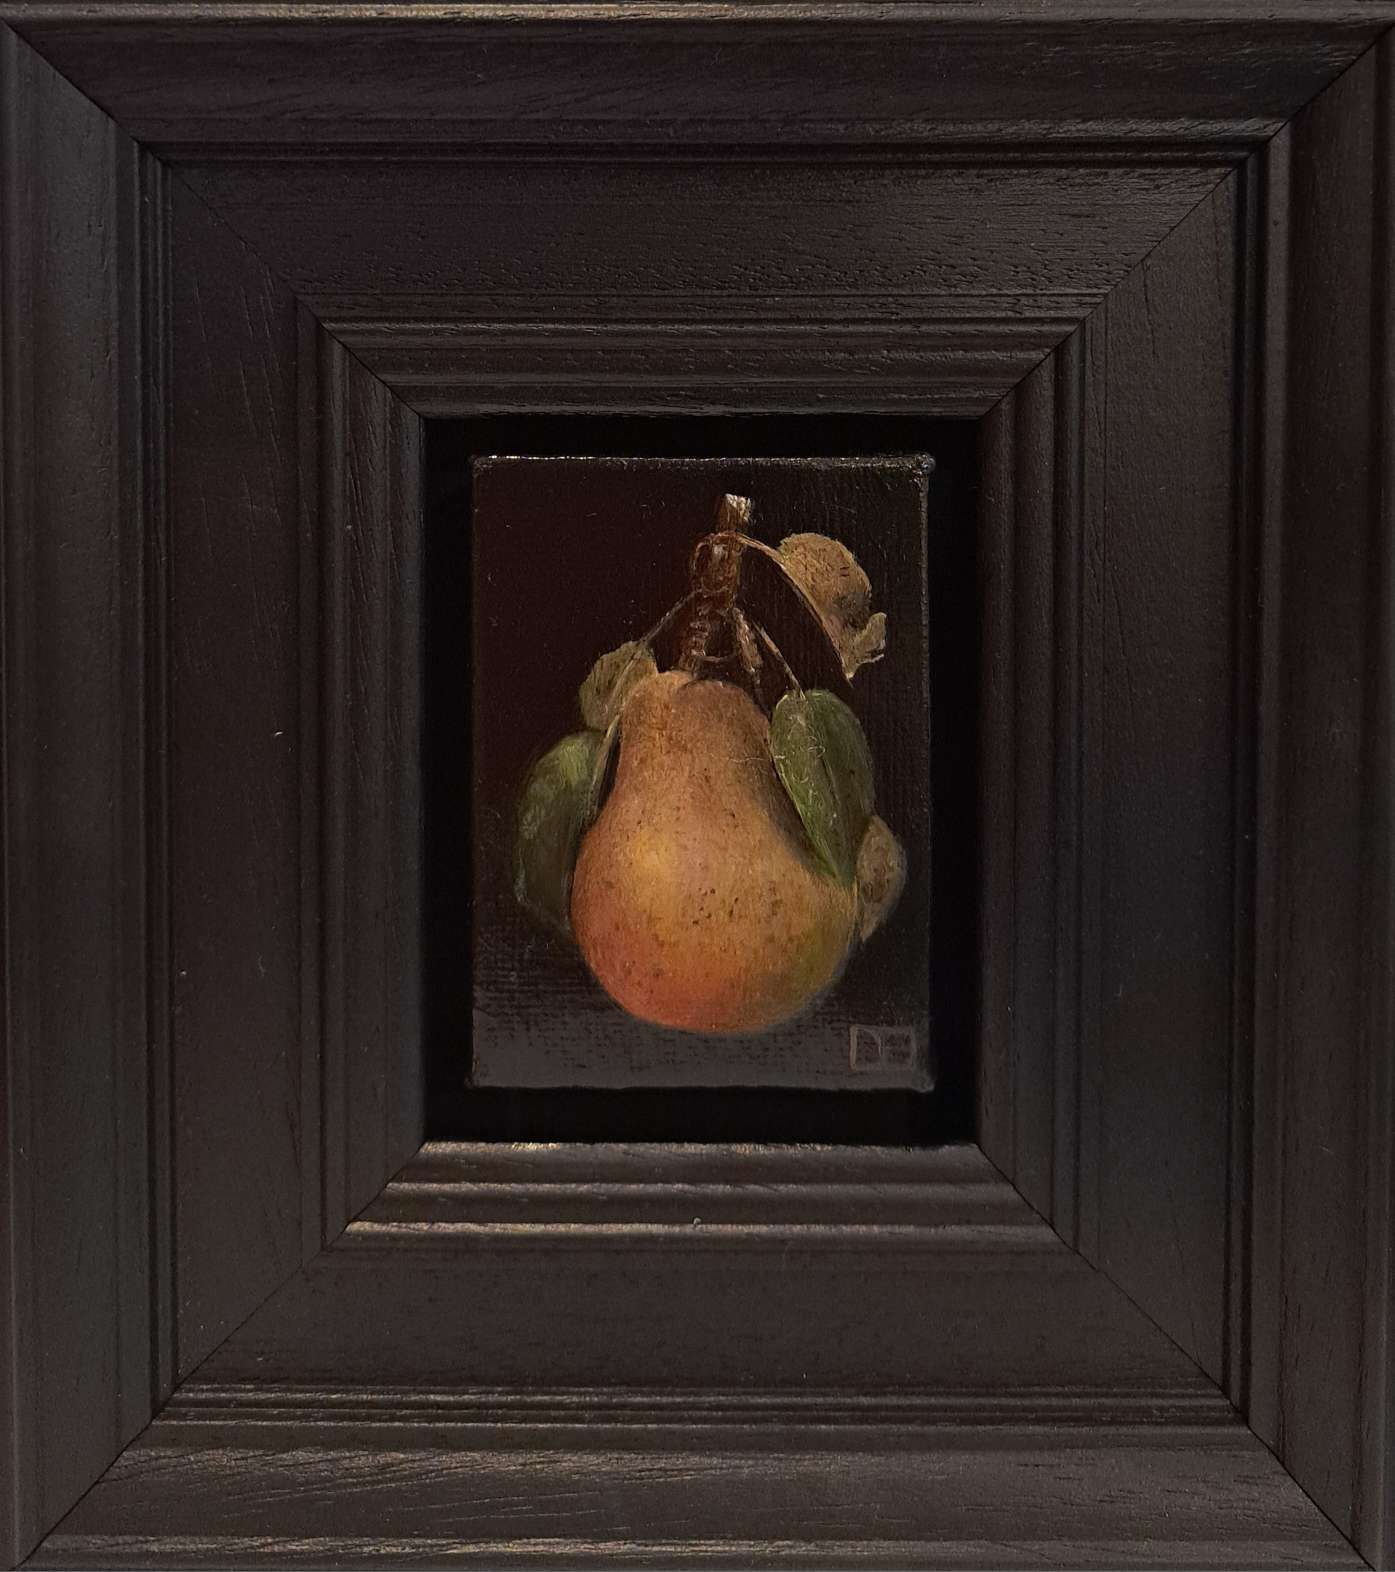 Pocket Rusty Wild h Pear by Dani Humberstone